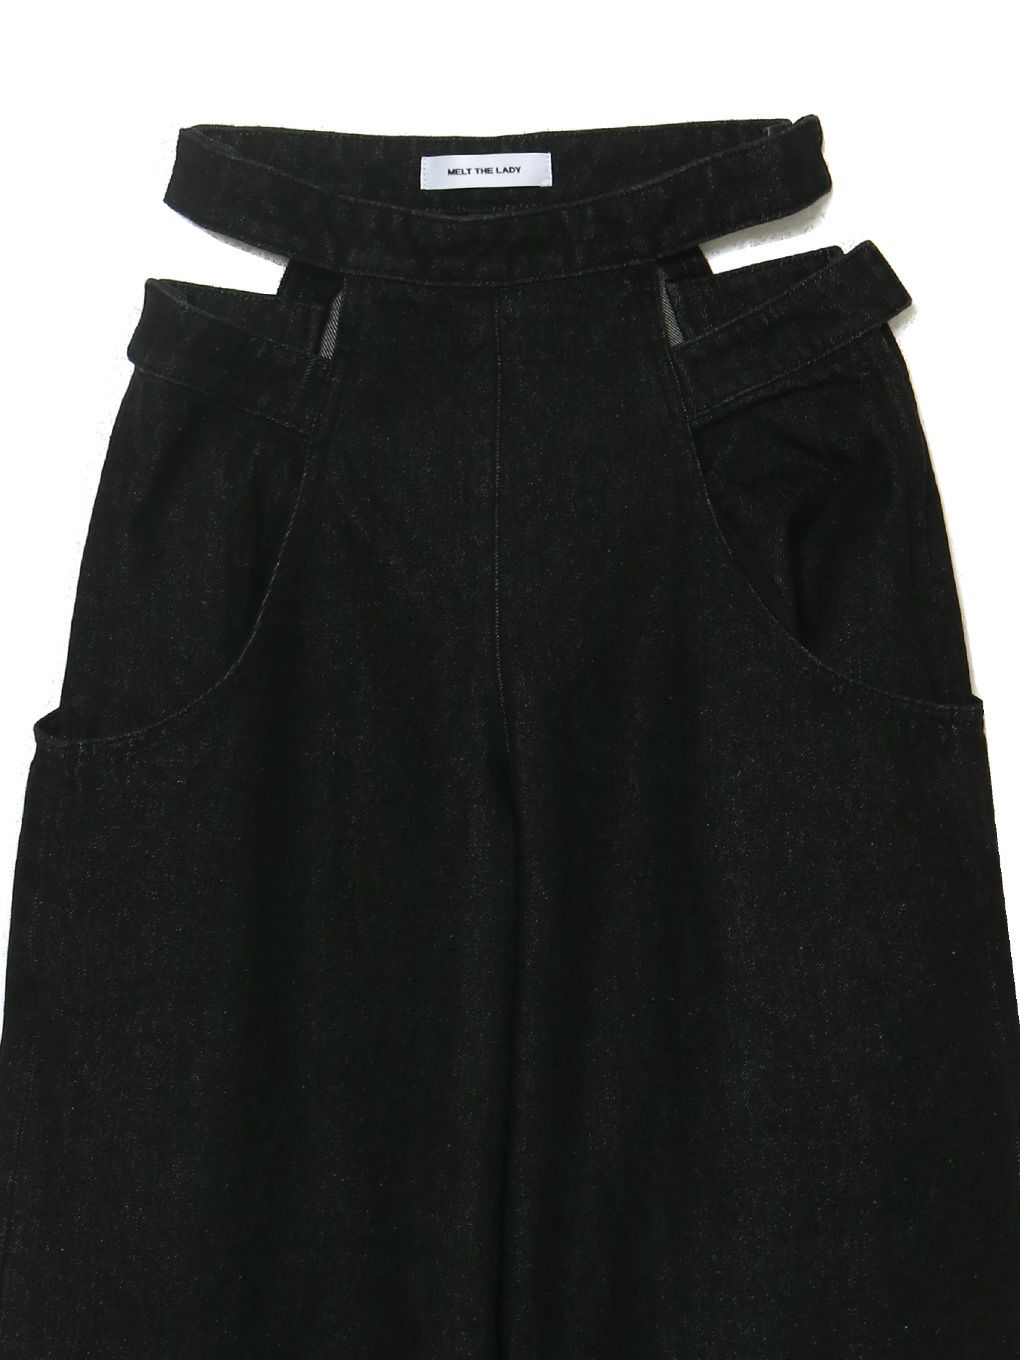 Mondetta Women's Pants Size L Pull On Wrinkle Resistant w/Stretch Black